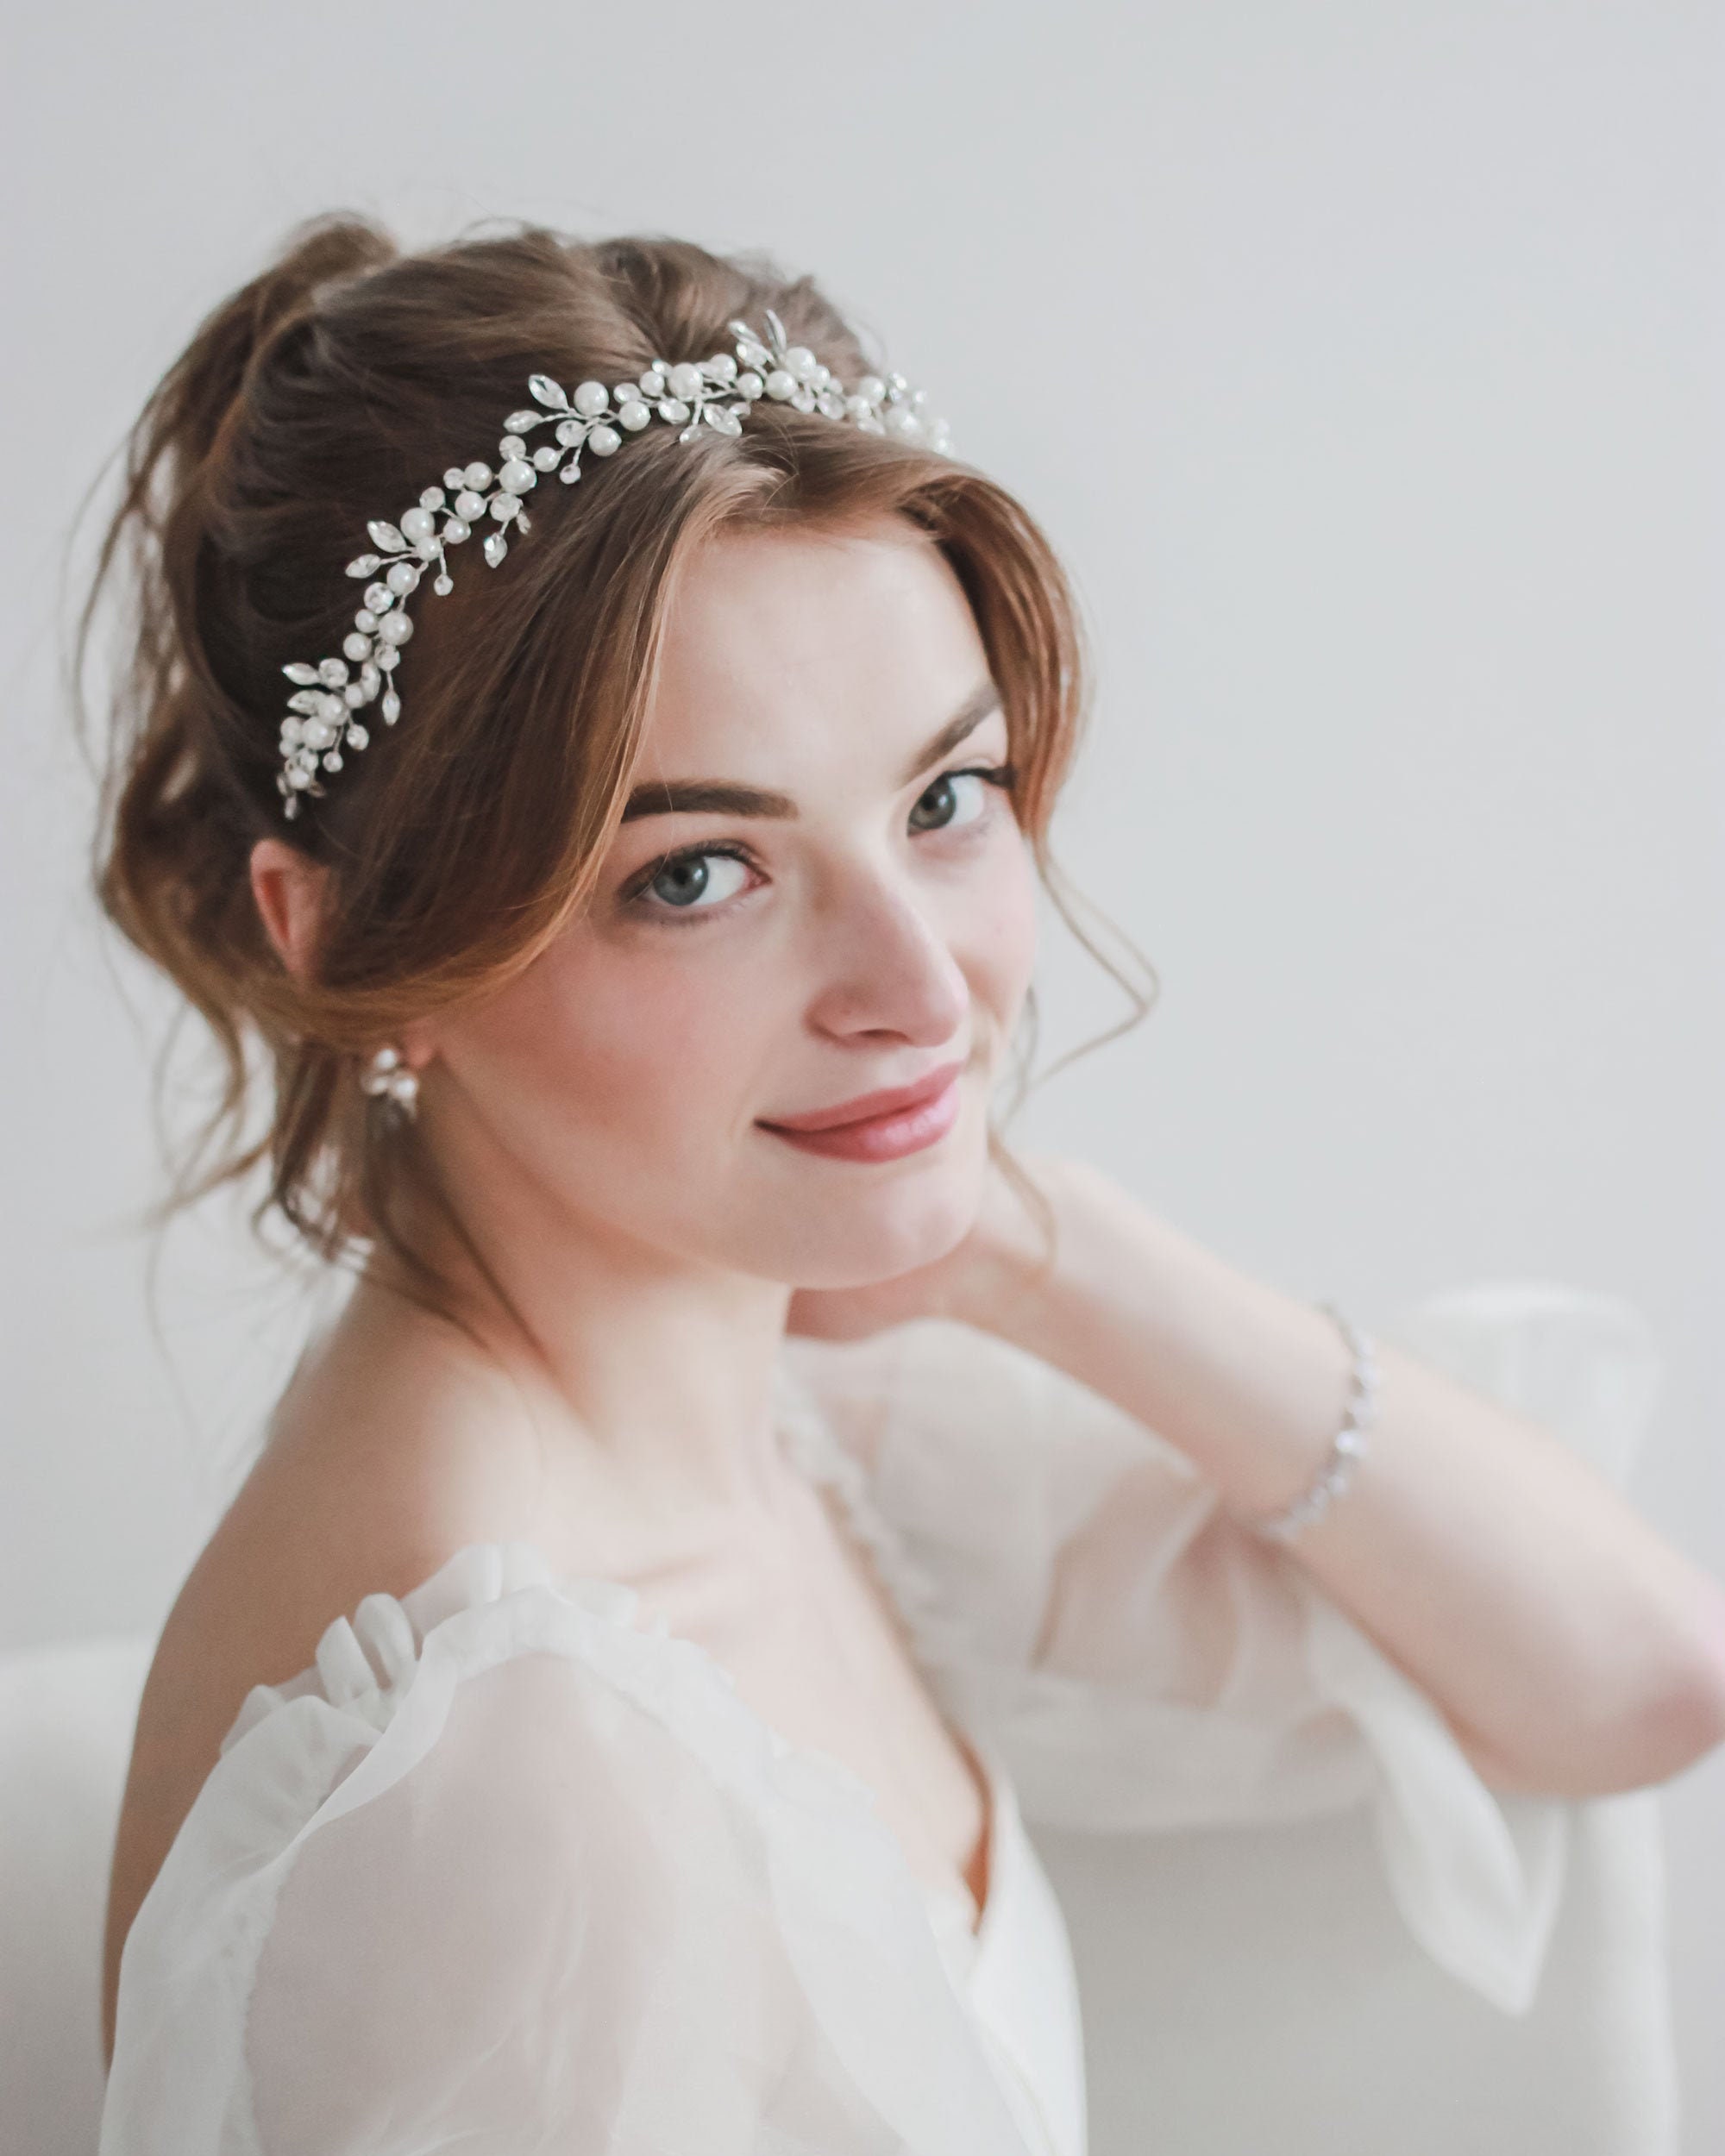 Crystal Wedding Dress Belt Rhinestone Bridal Sash Hair Vine Headband Headdress